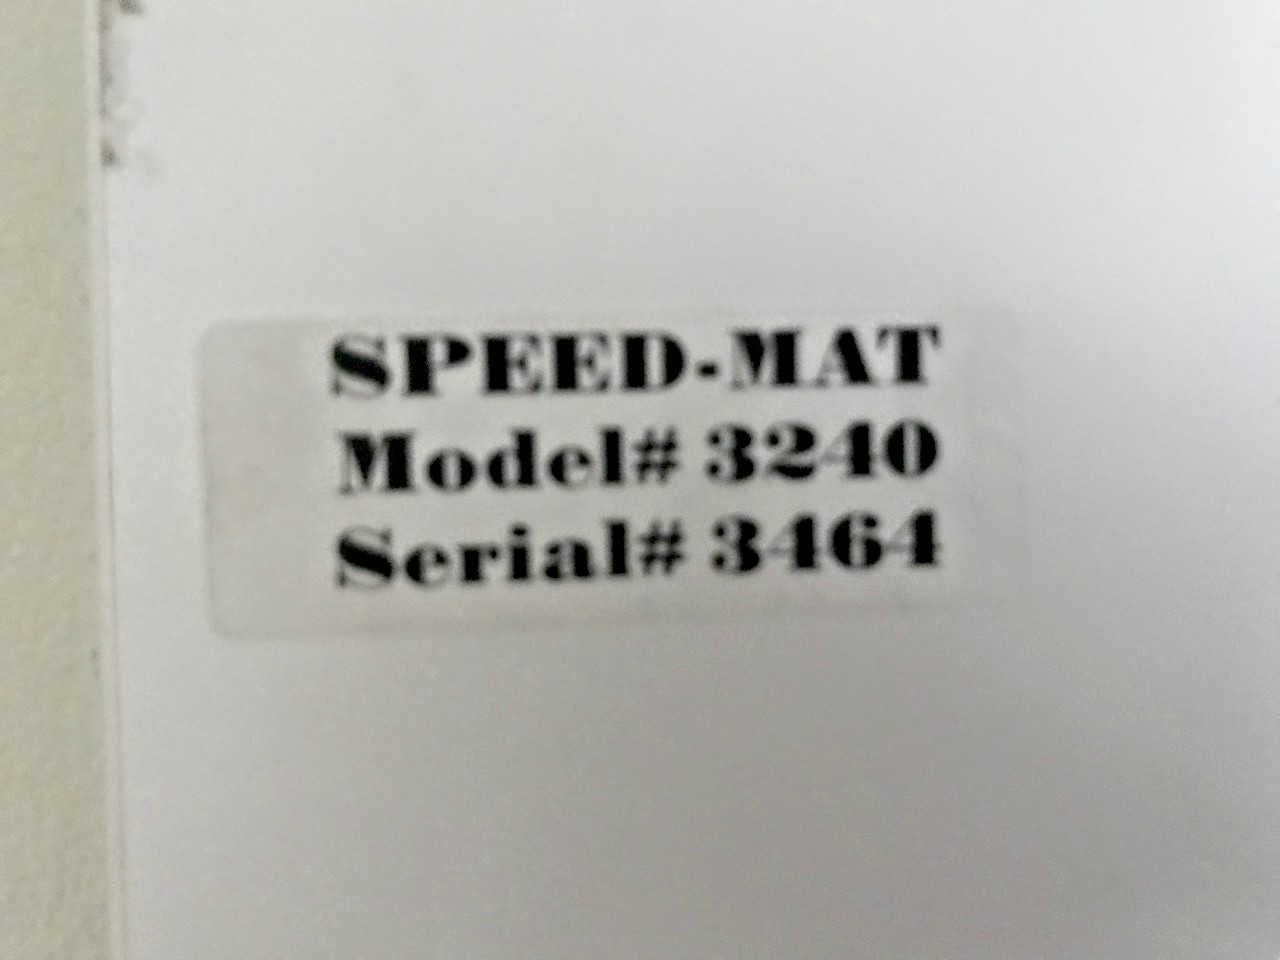 Esterly 3240 Speed Mat Cutter (used) Item # UFE-C1816 (Florida)